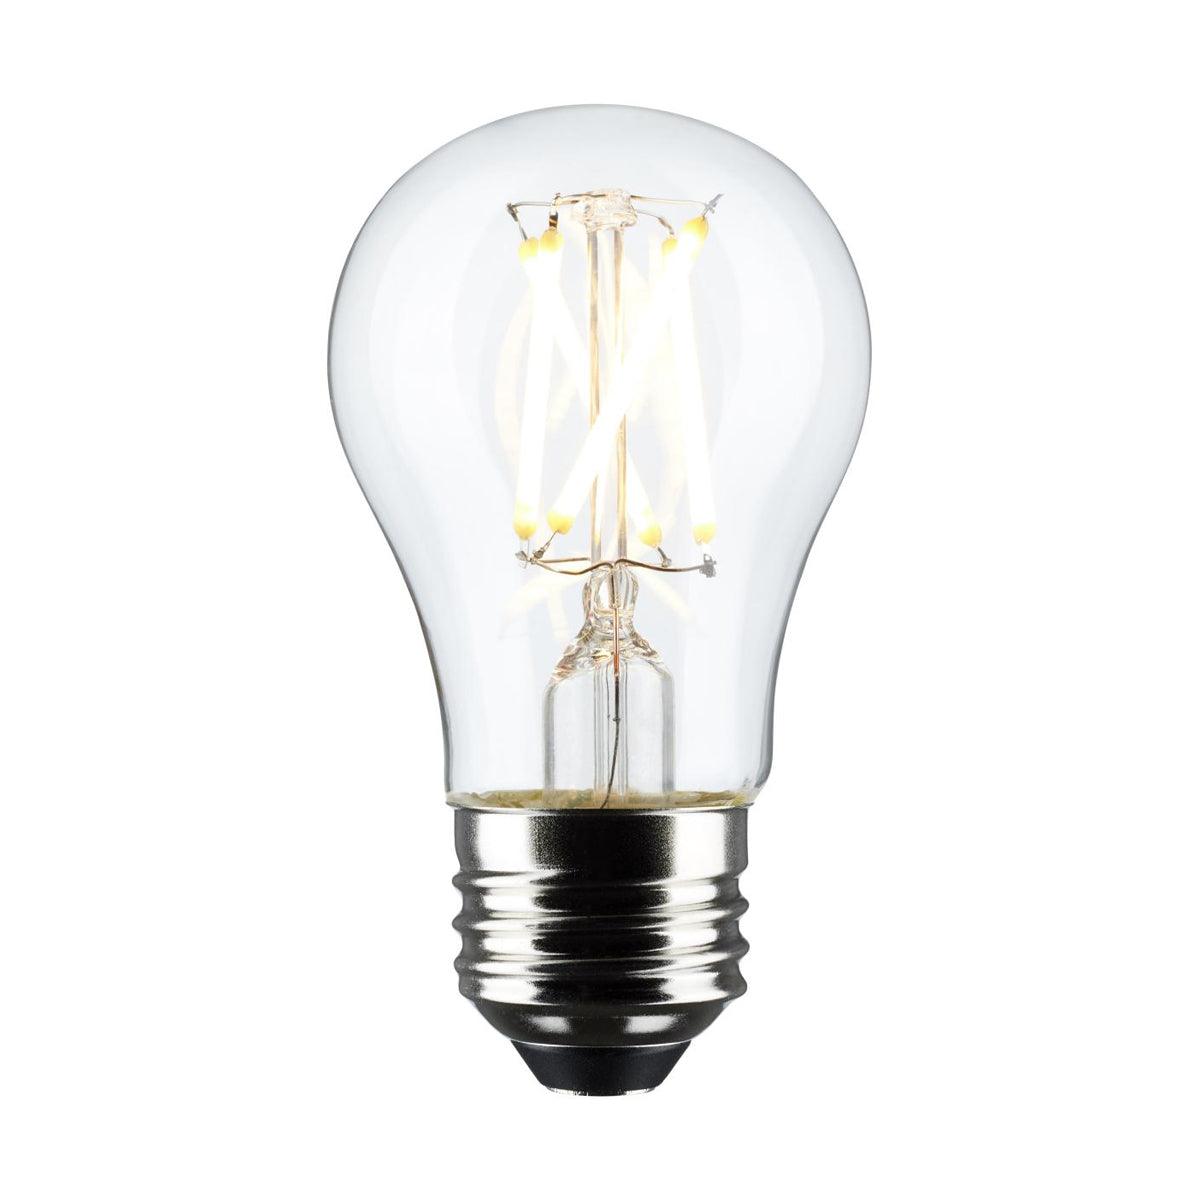 A15 Standard LED Bulb, 6 Watt, 450 Lumens, 2700K, E26 Medium Base, Clear Finish, Pack Of 2